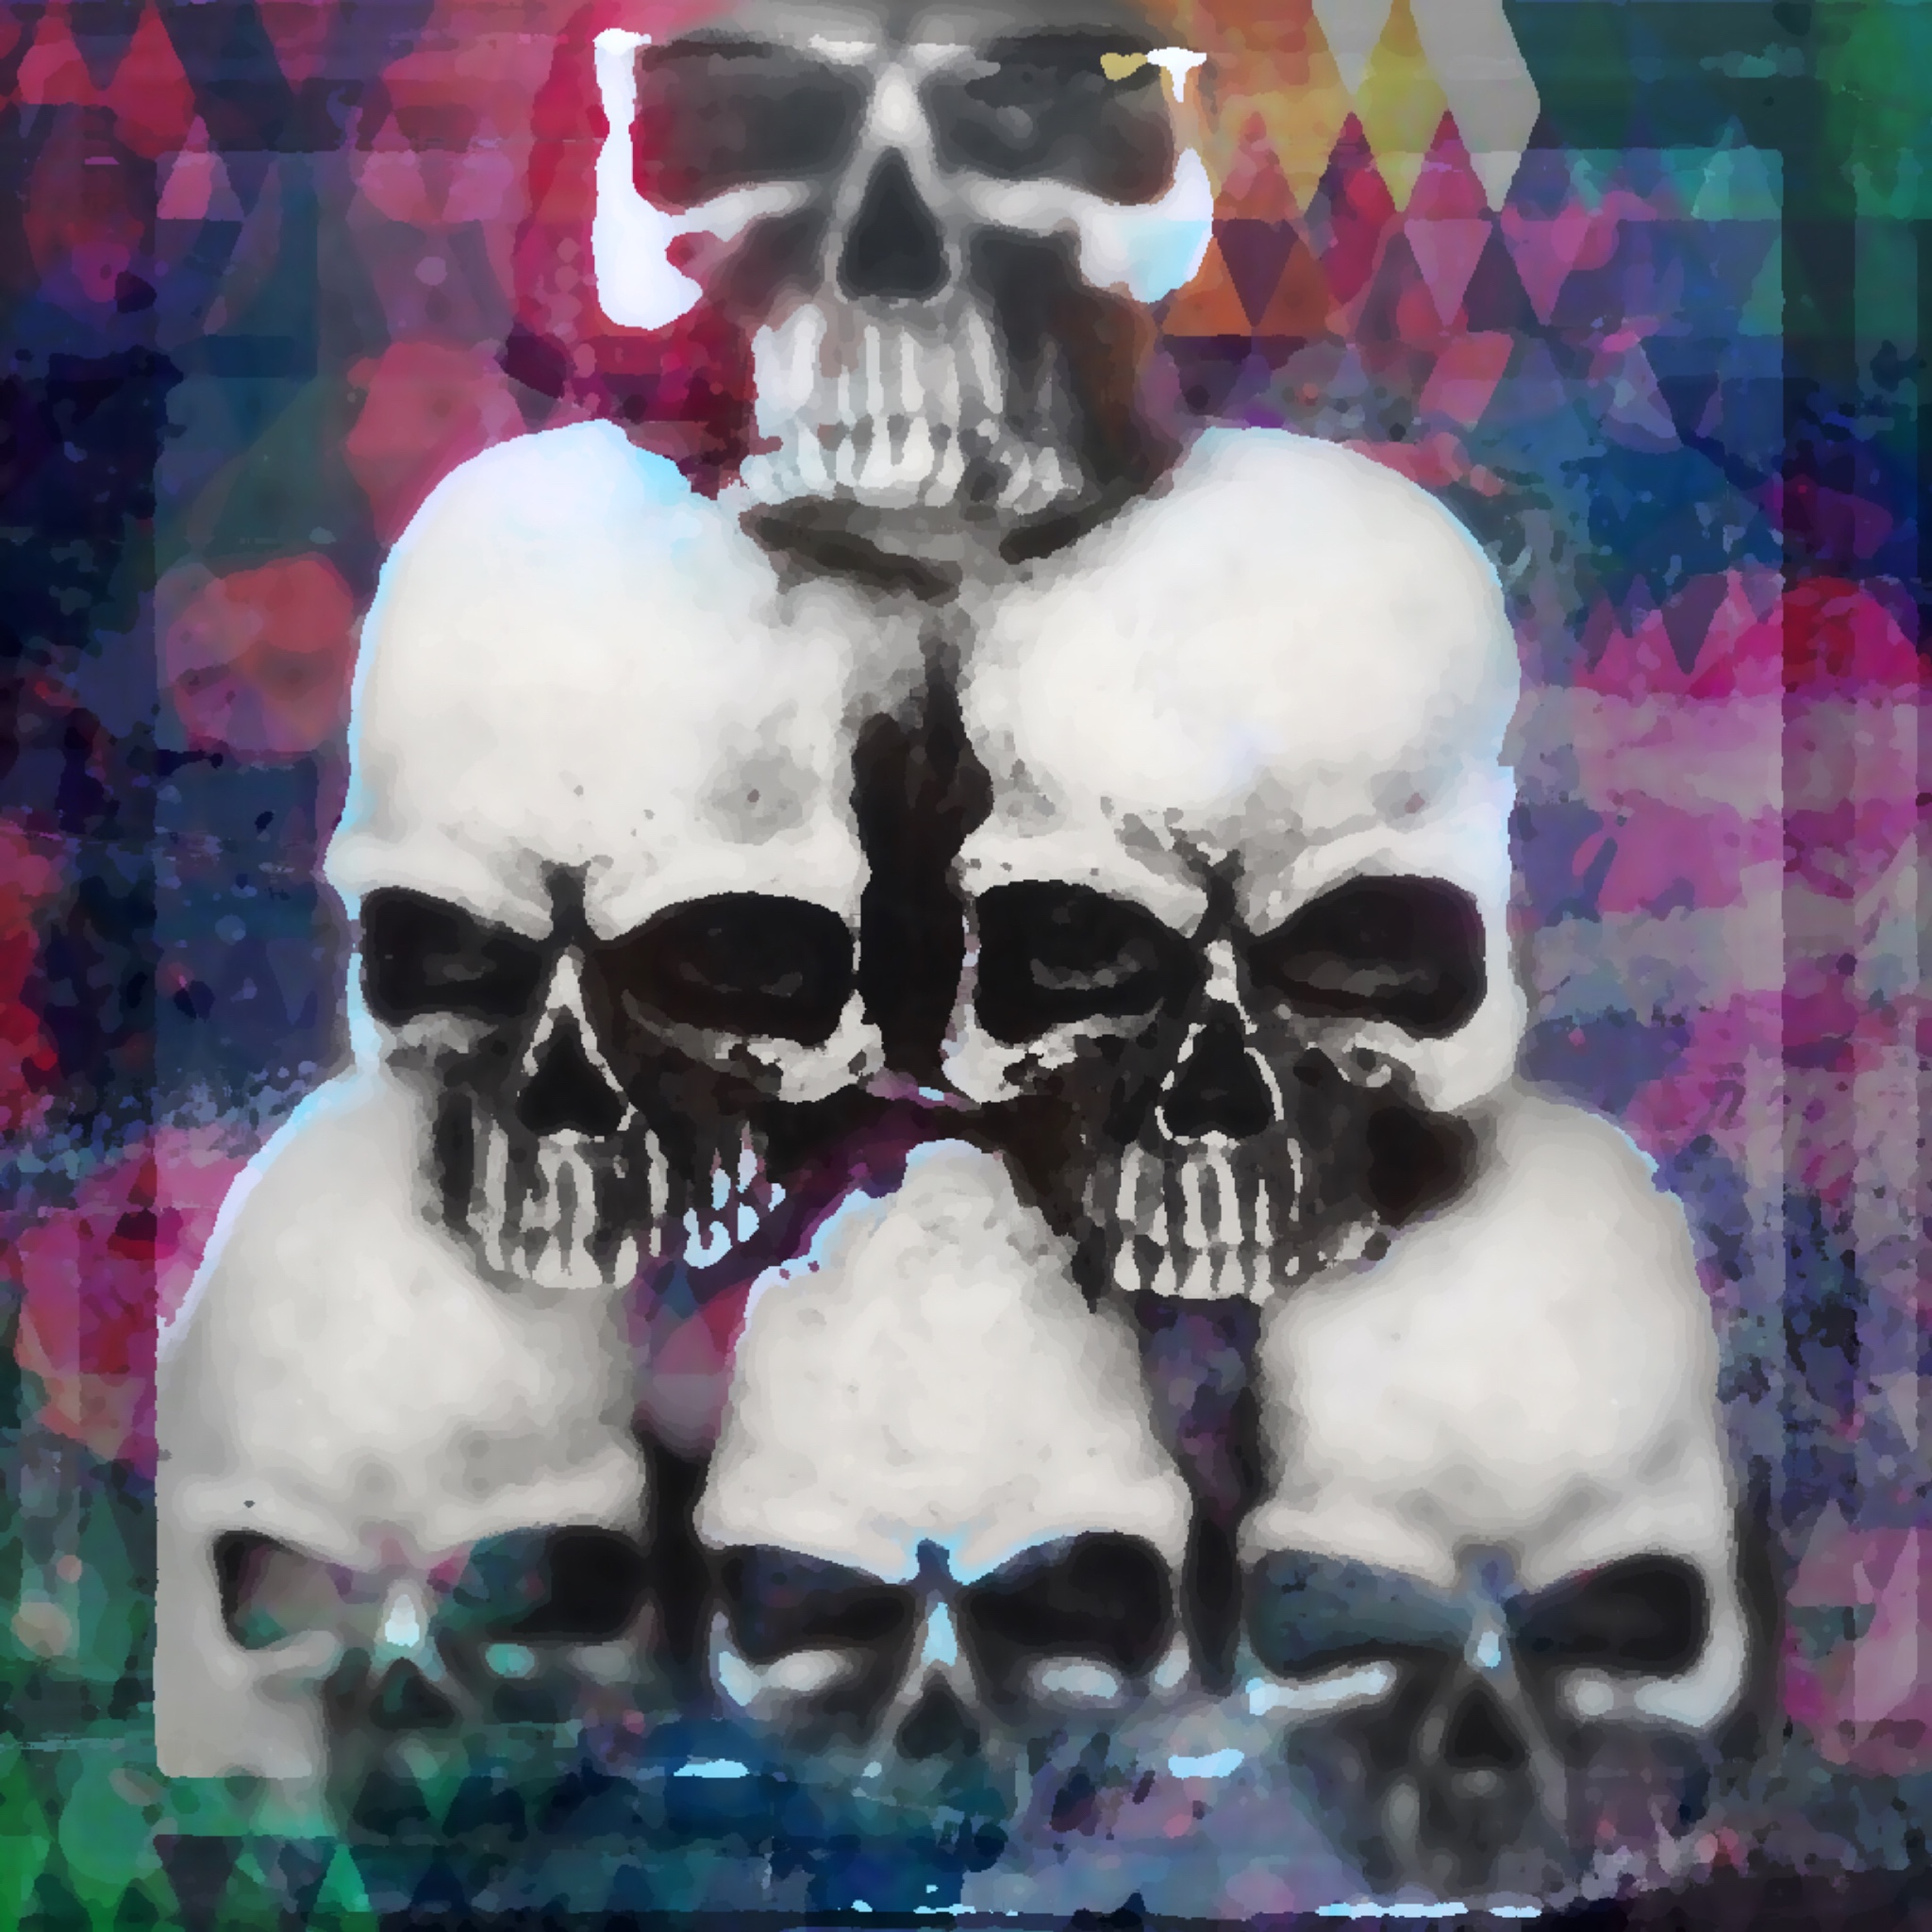 Alas,Poor Yorick - Pyramid of skulls by Janey